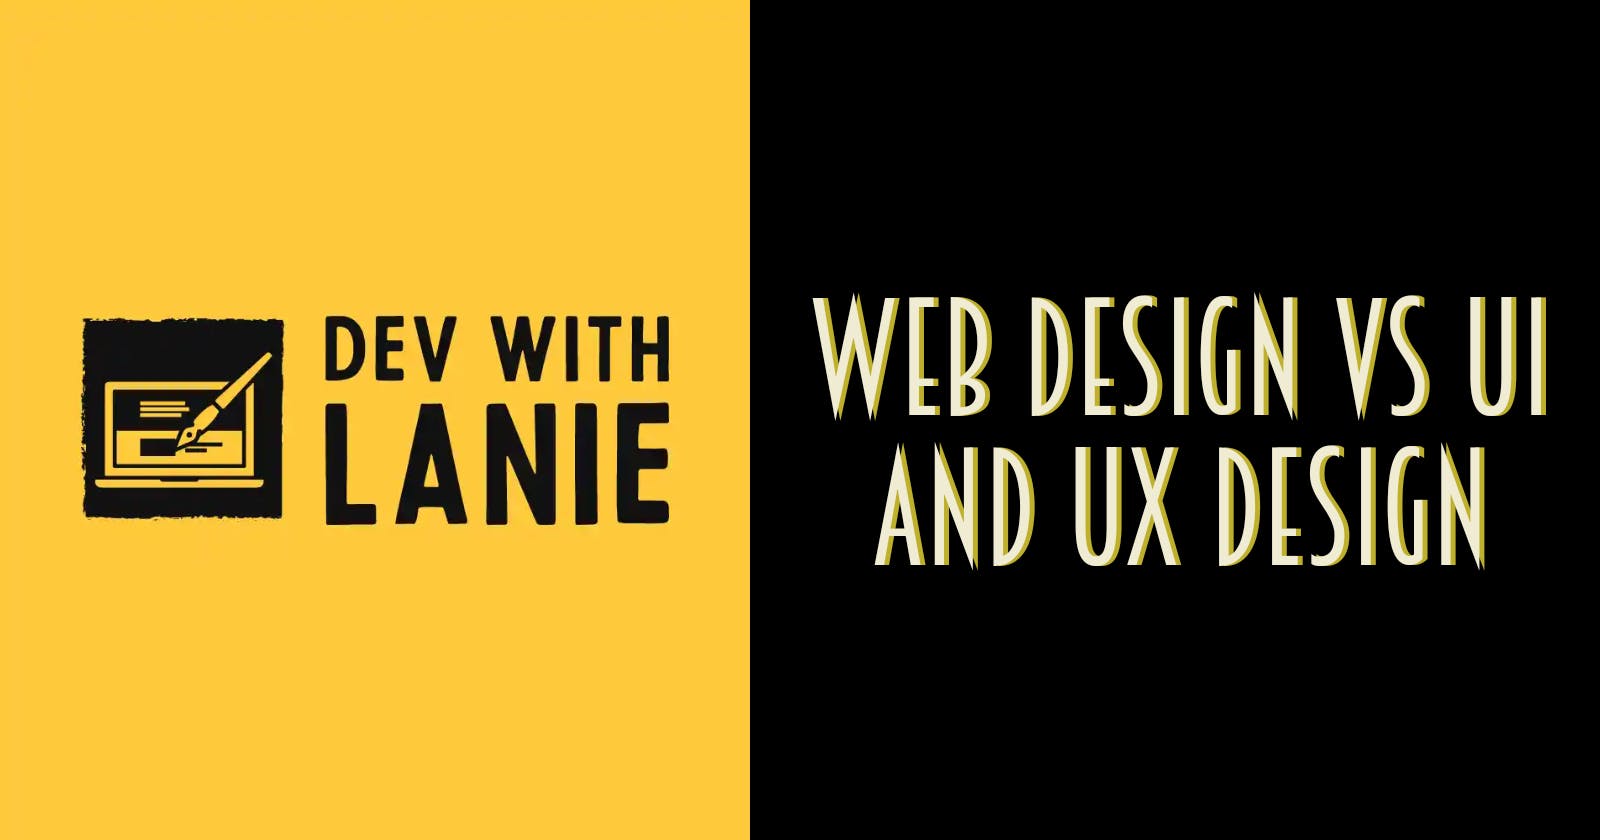 Web design vs UI and UX design